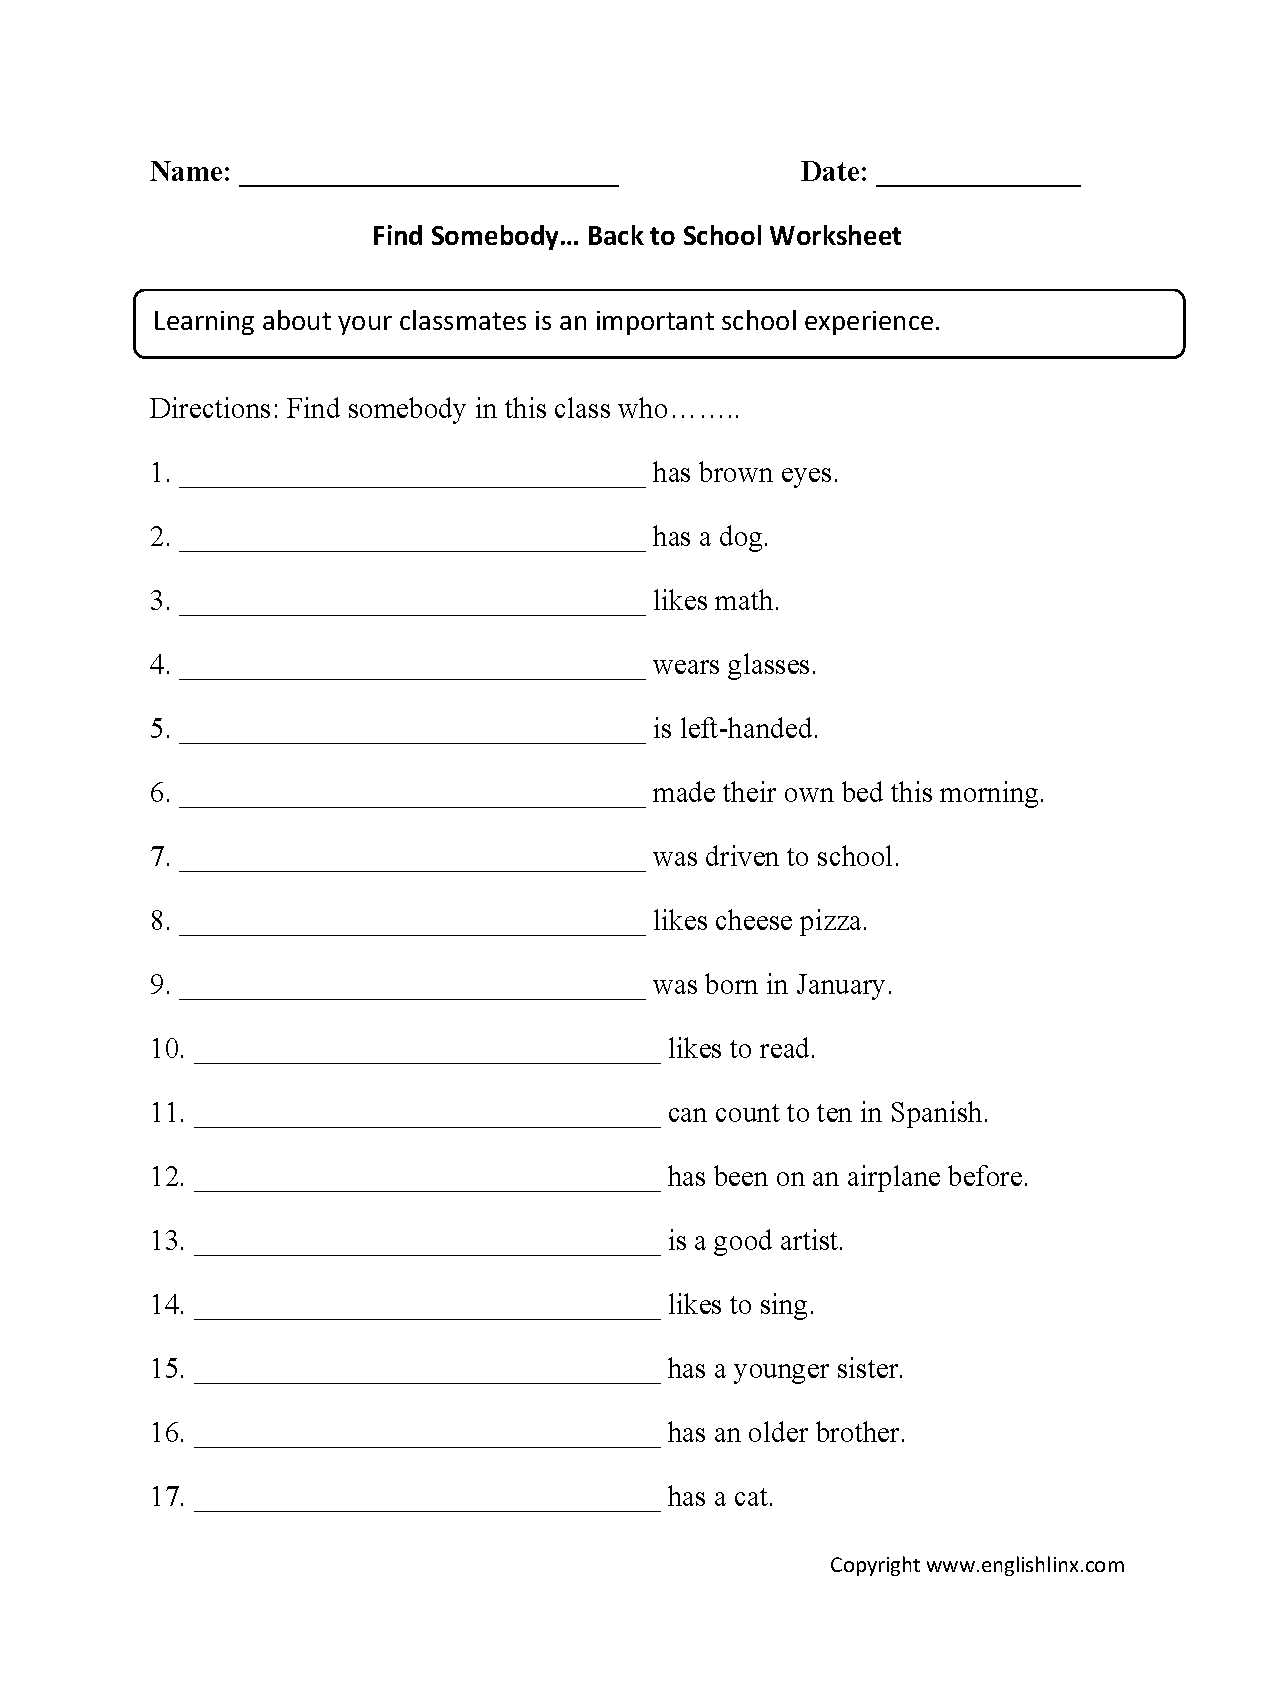 Worksheet Answer Finder with Kids School Worksheet Back to School Worksheets and Printouts